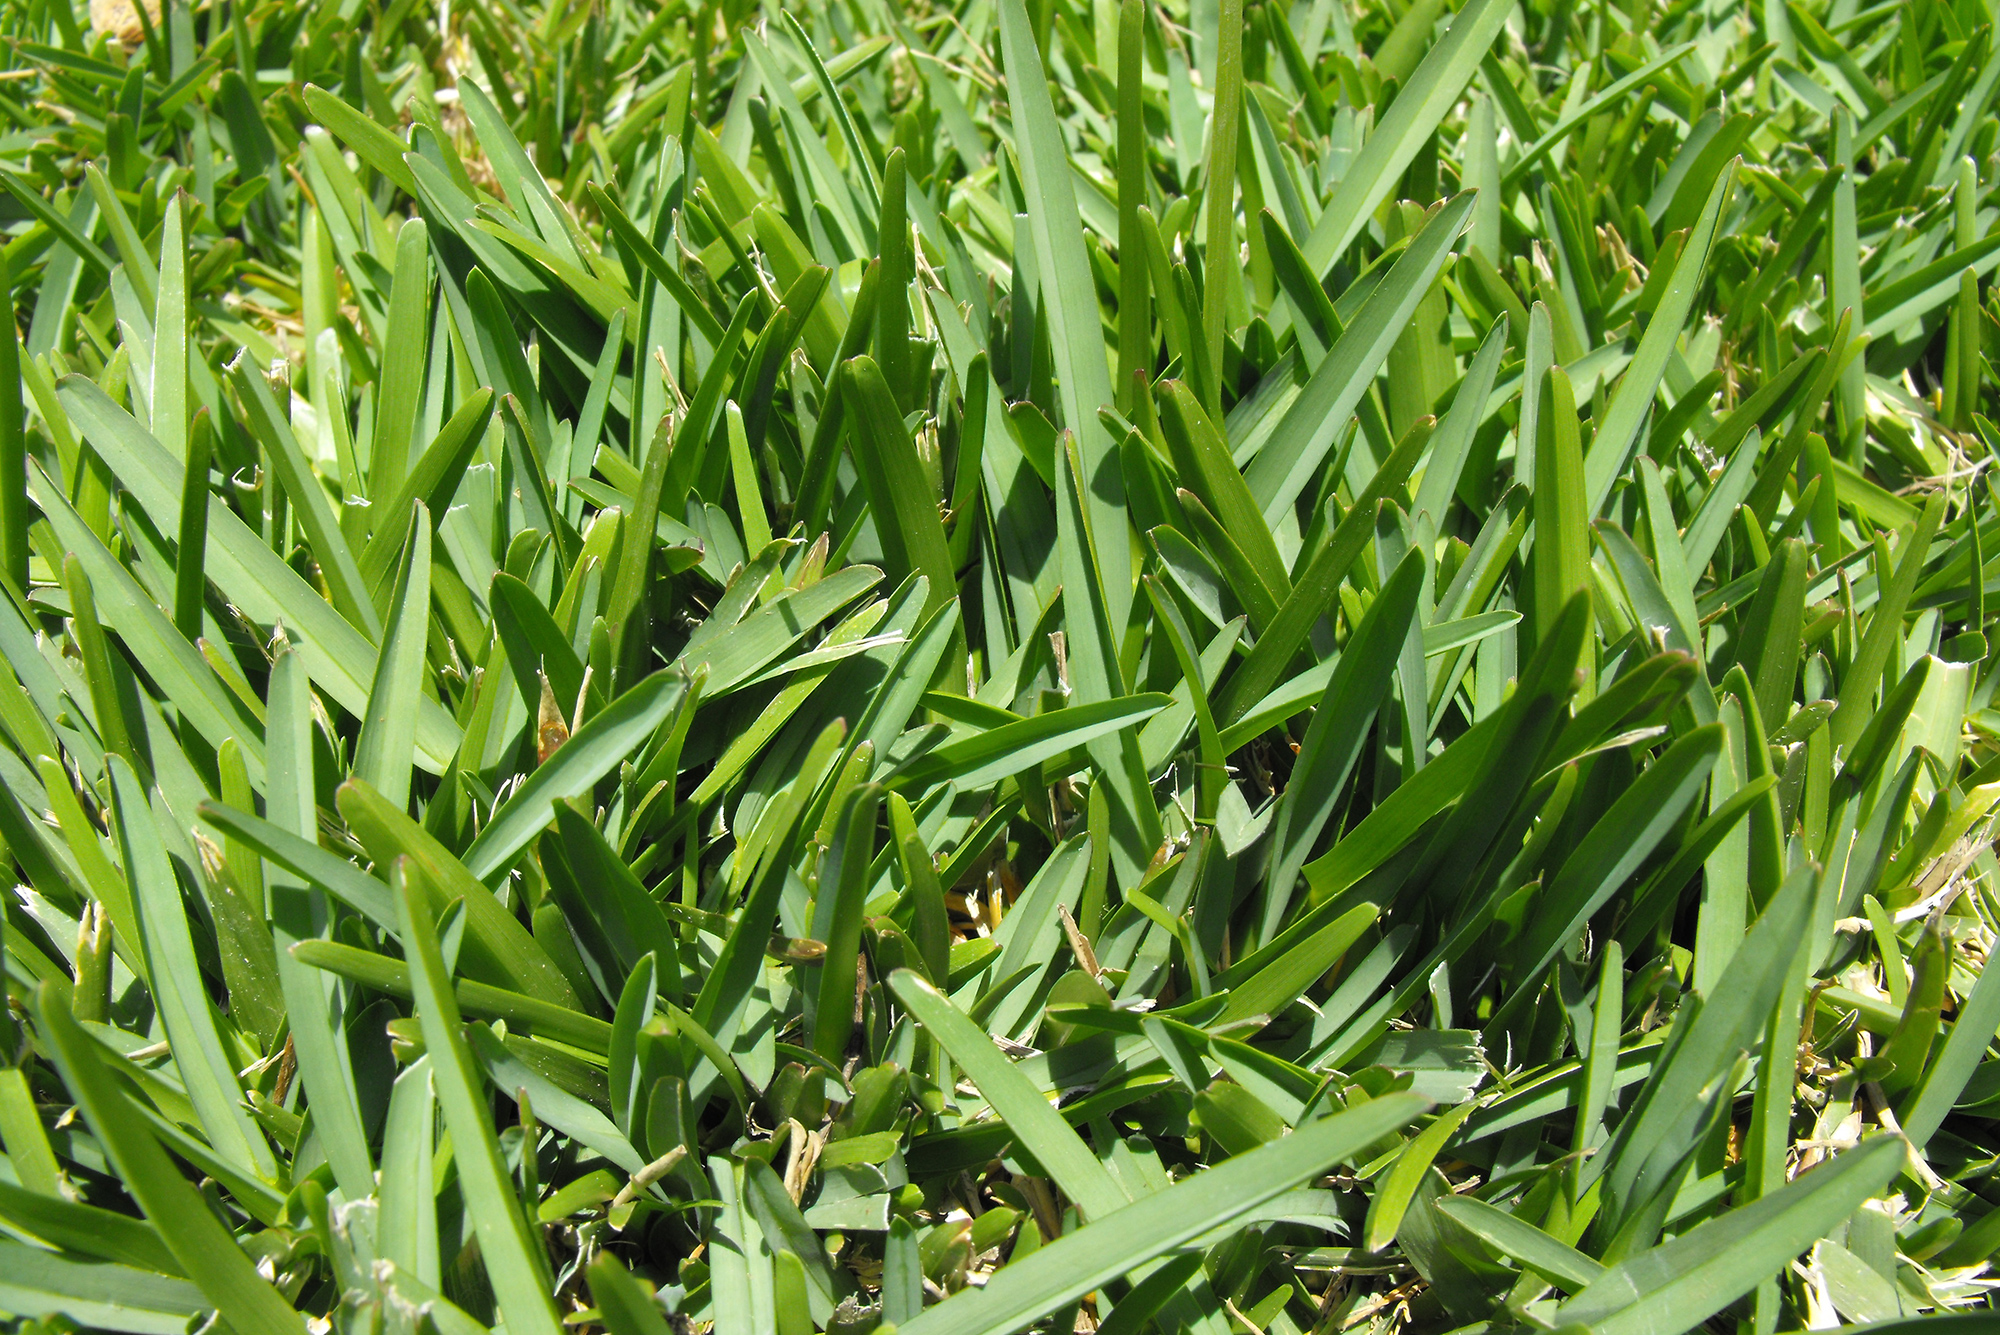 staugustine-grass.jpg